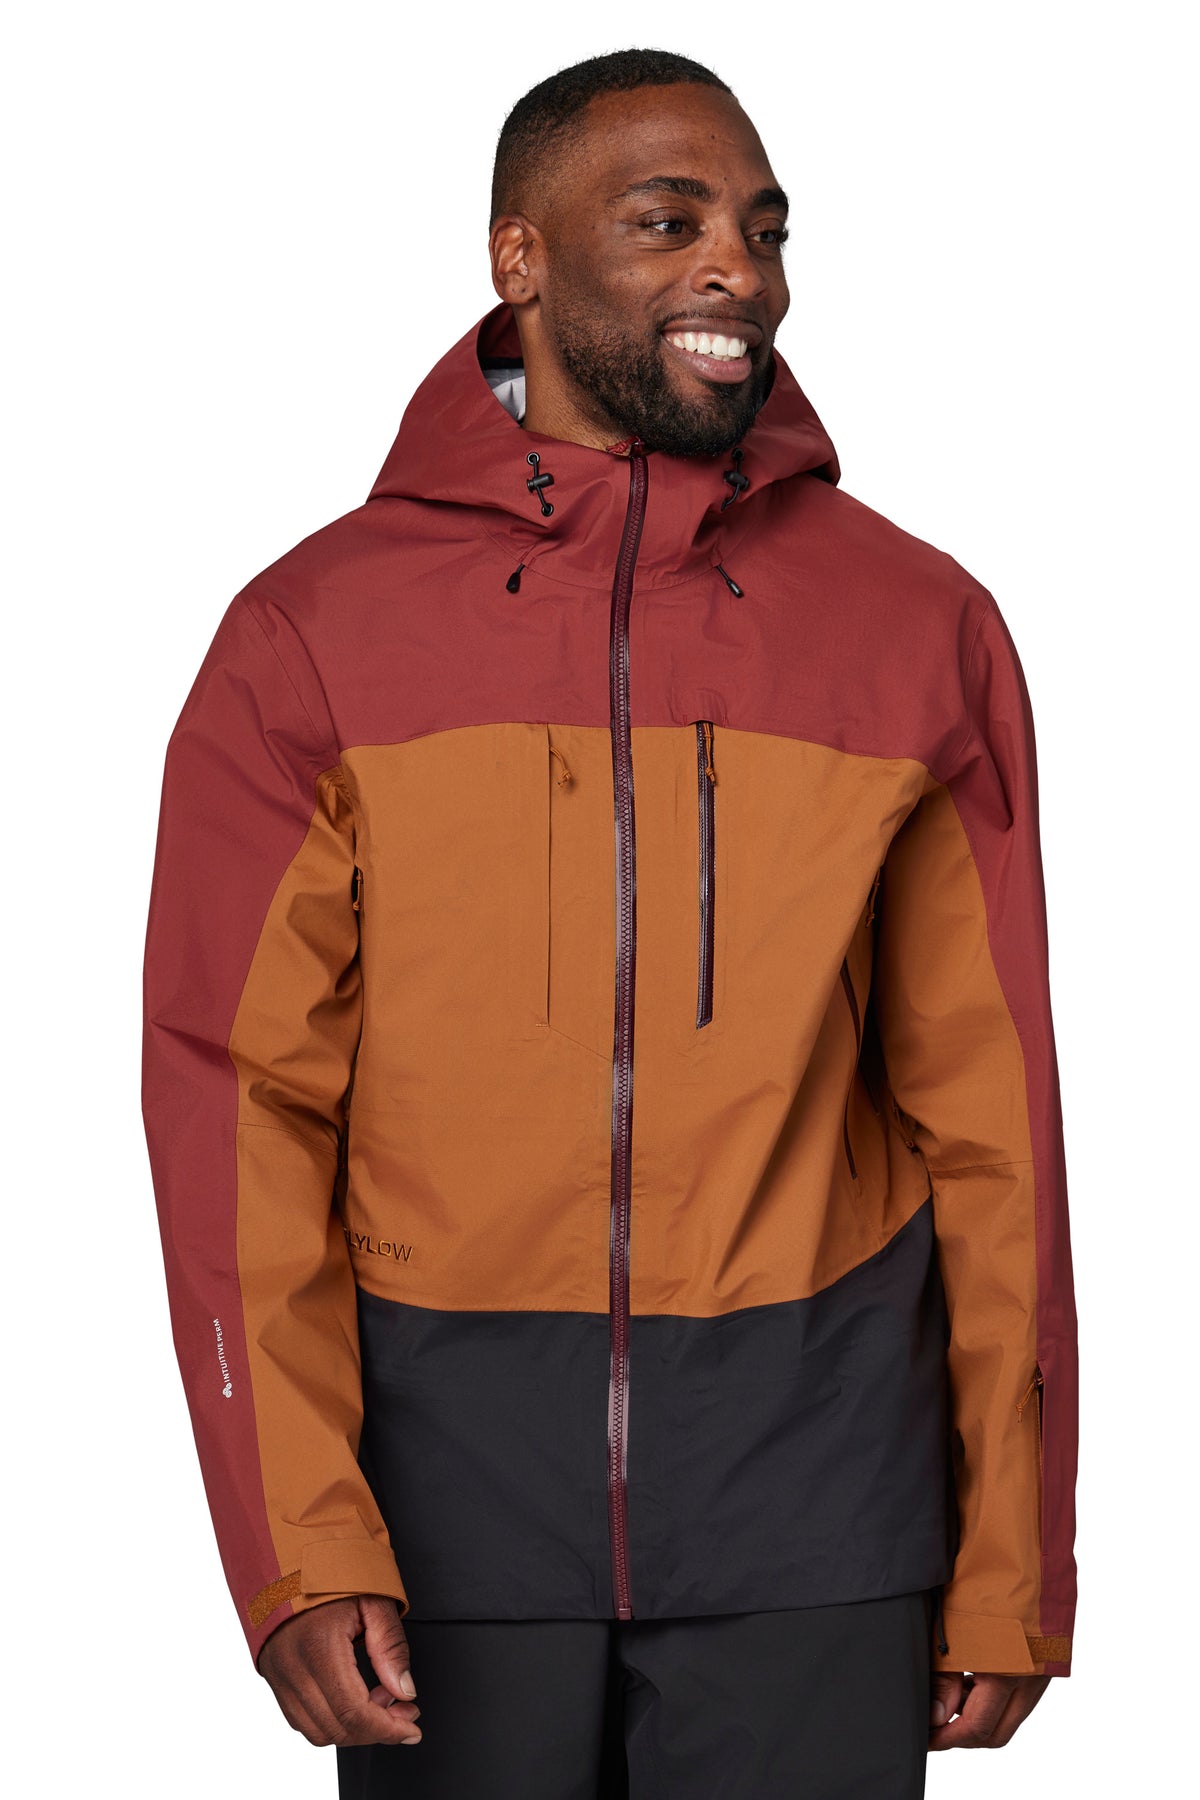 Lab Coat - Men's Backcountry Ski Jacket